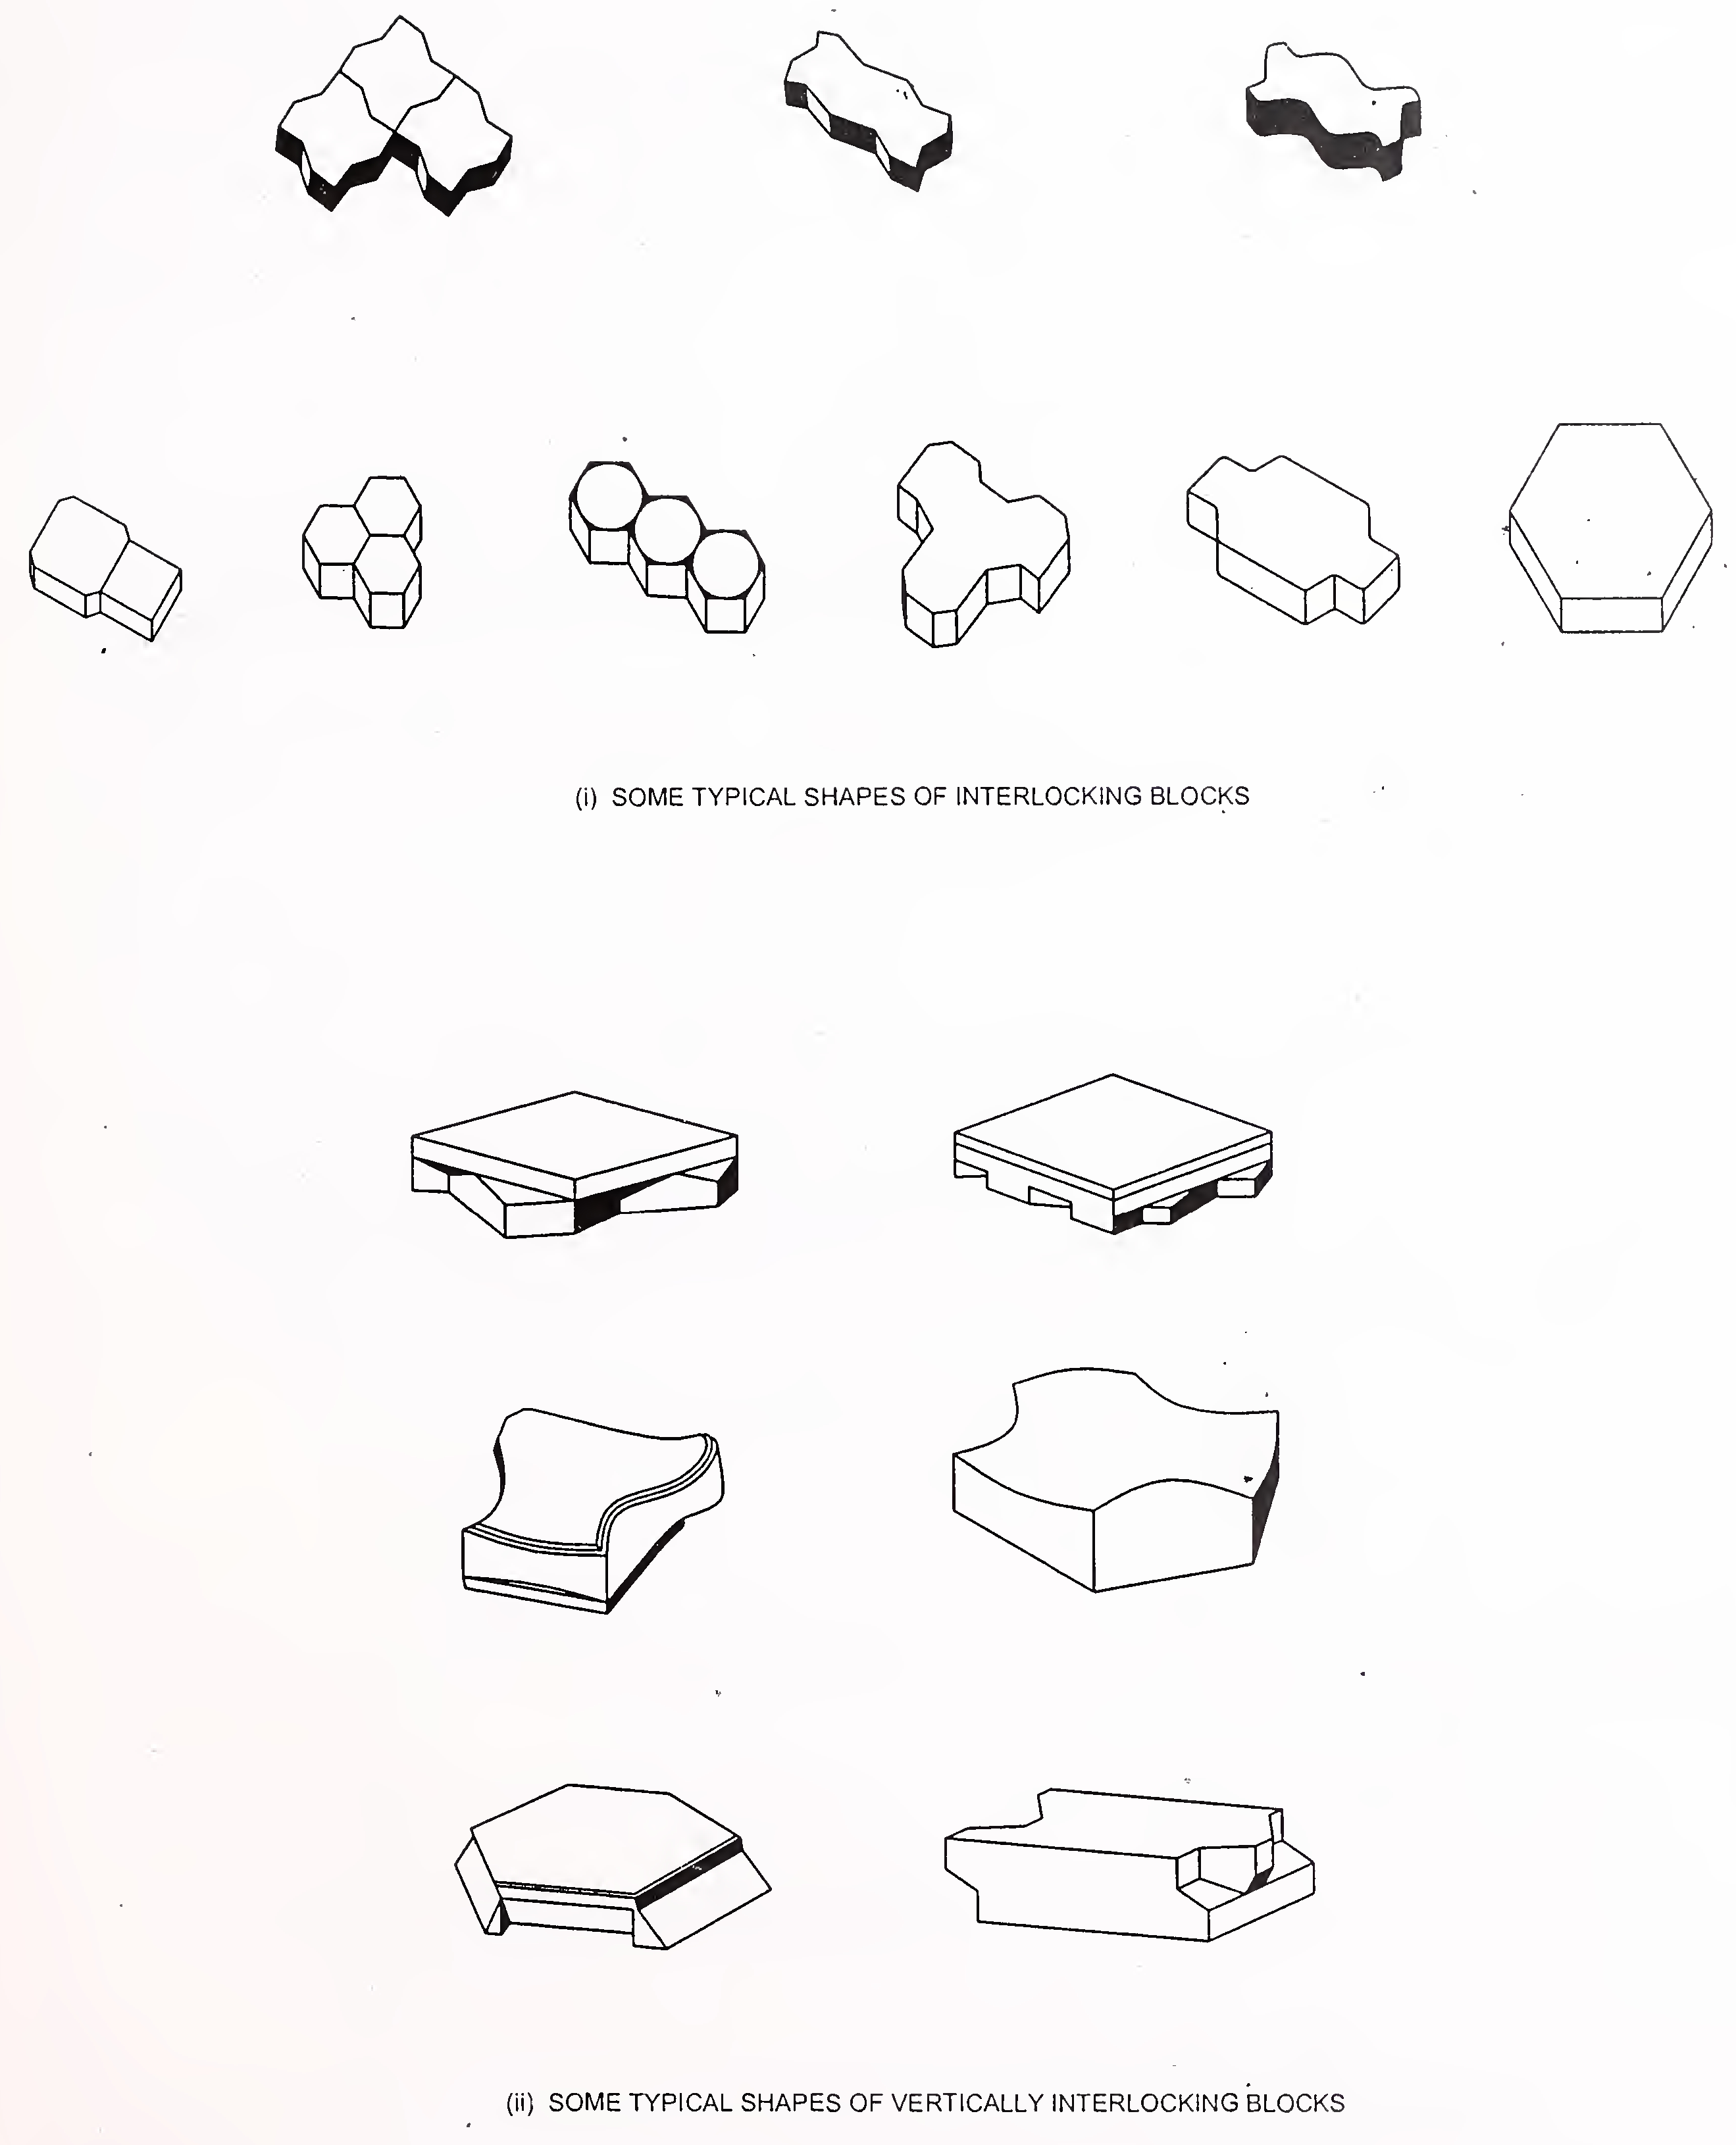 Fig. 1. Some shapes of interlocking blocks